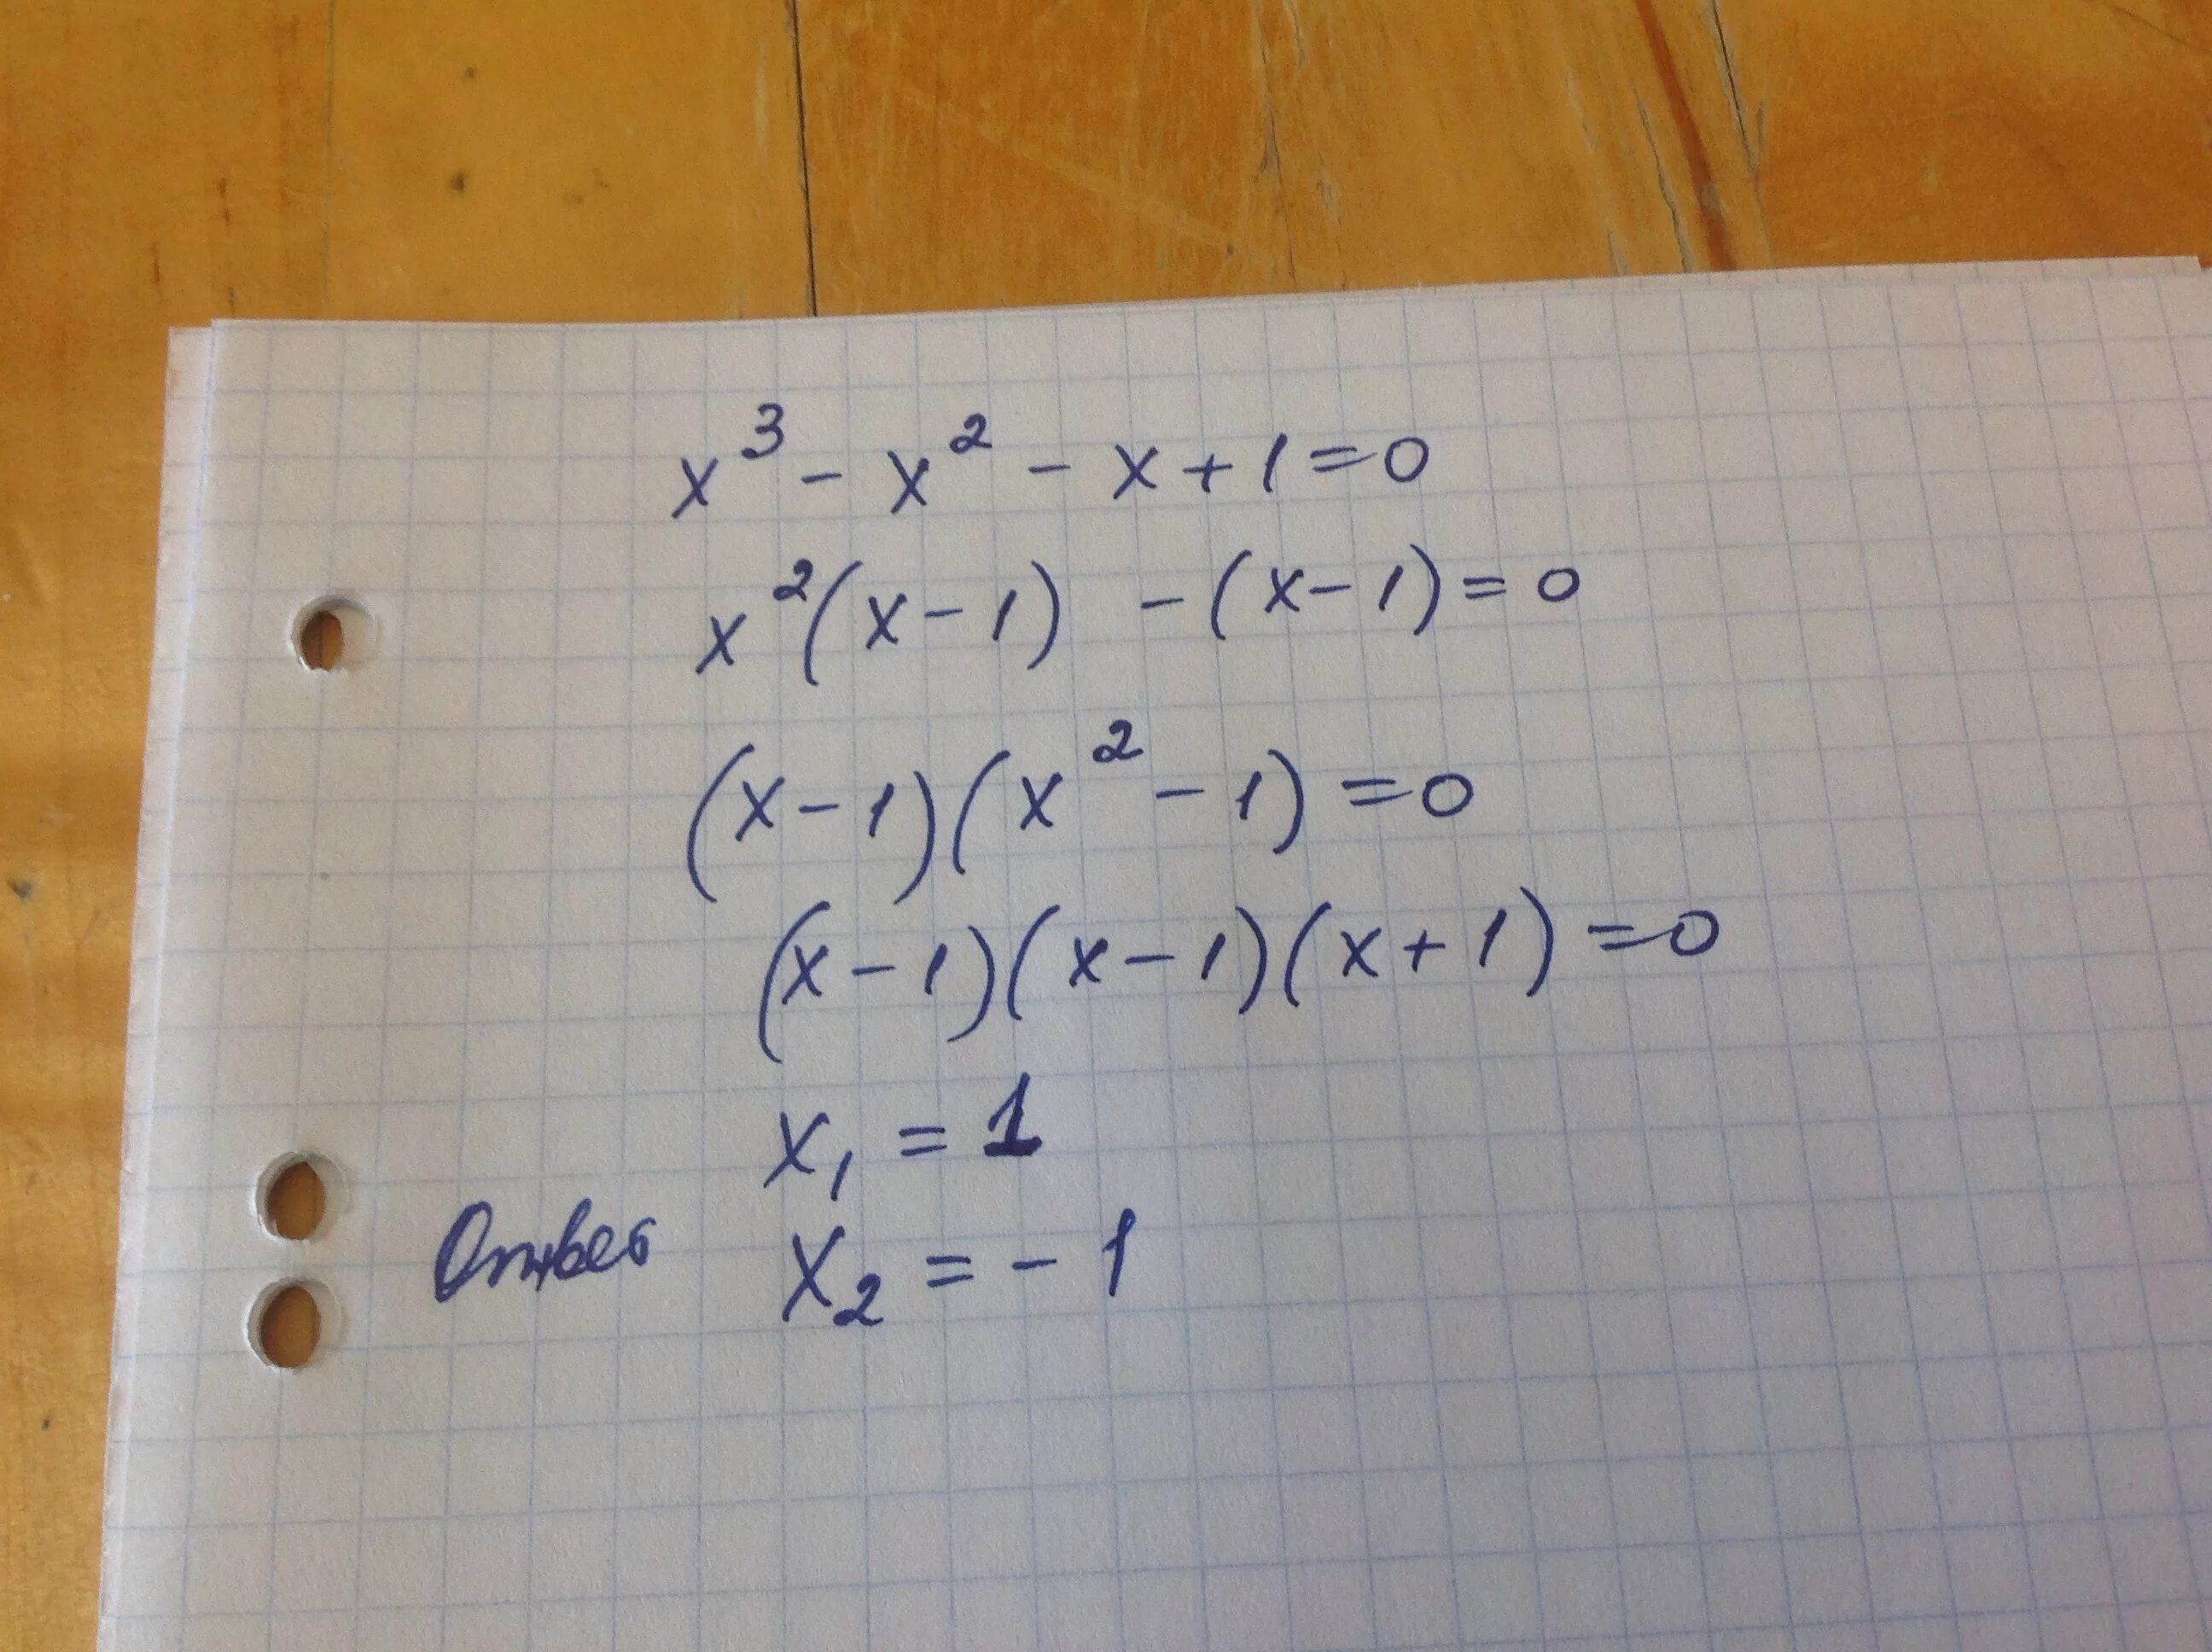 6x 3 9 5x 0. (X-2)(-2x-3)=0. X^3-X^2-X+1=0. 2^X=3^X. 3-X/3=X/2.